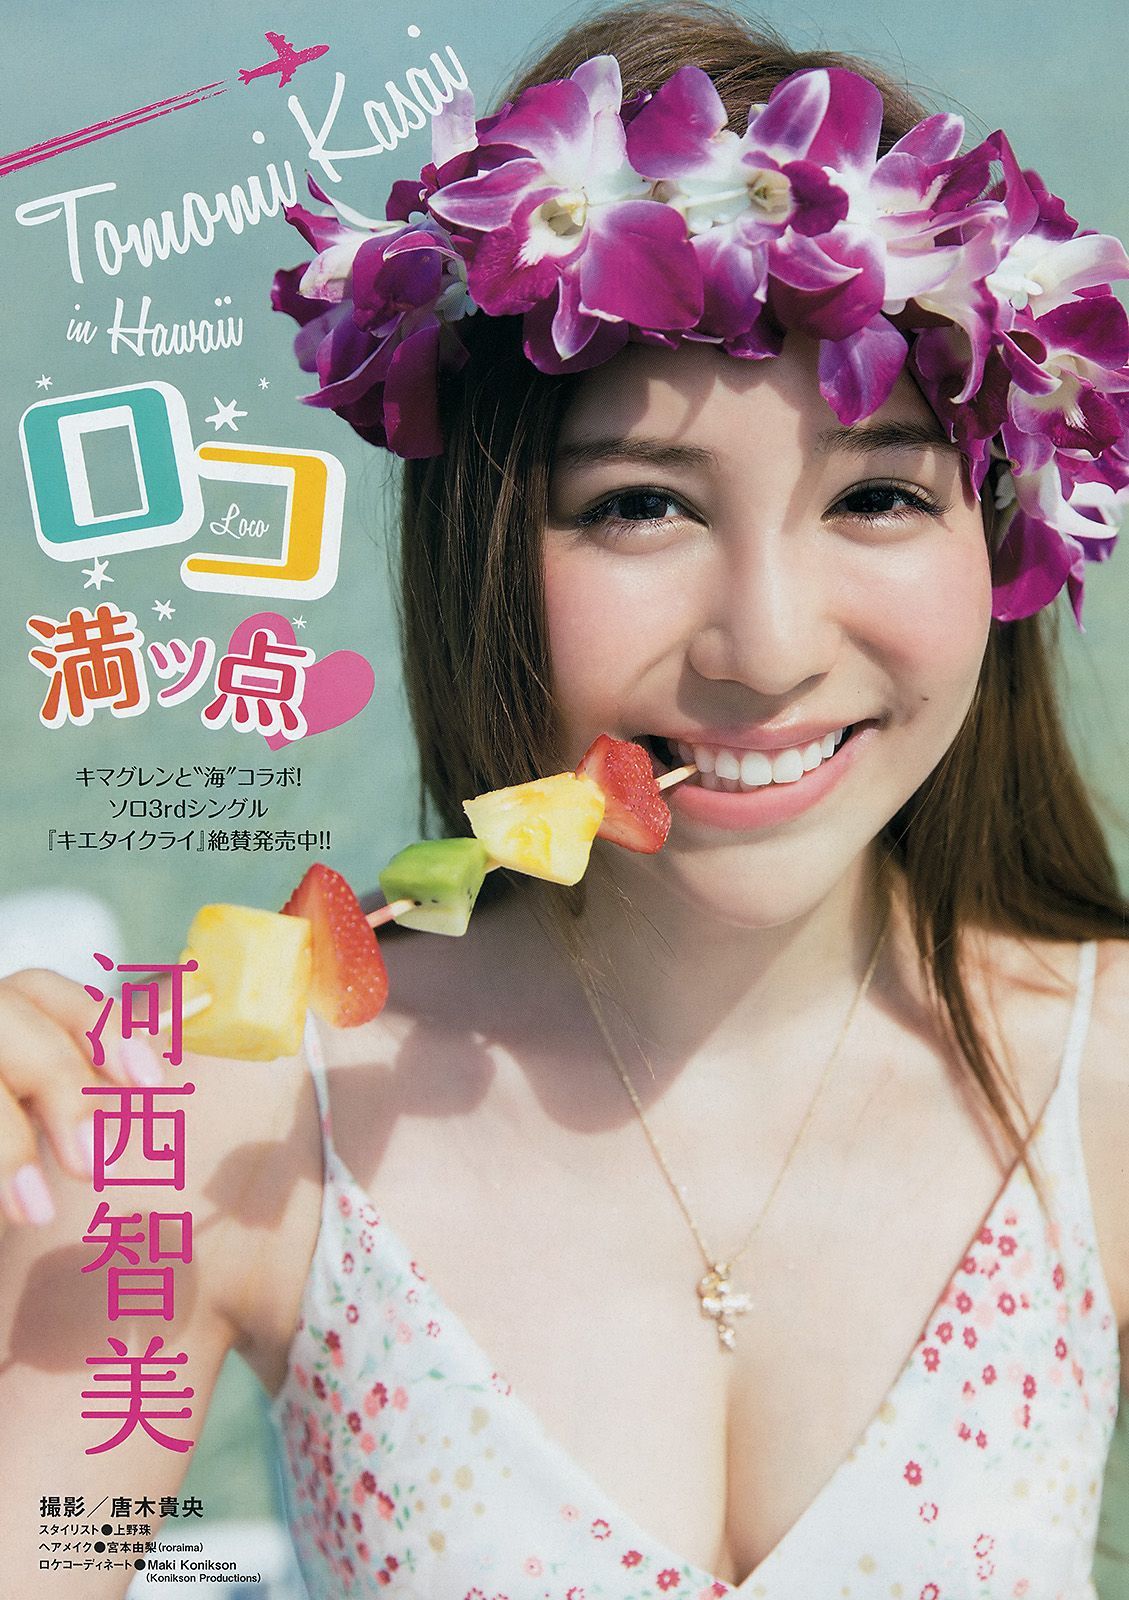 [Young Magazine]杂志:河西智美高品质写真作品个人分享(10P)